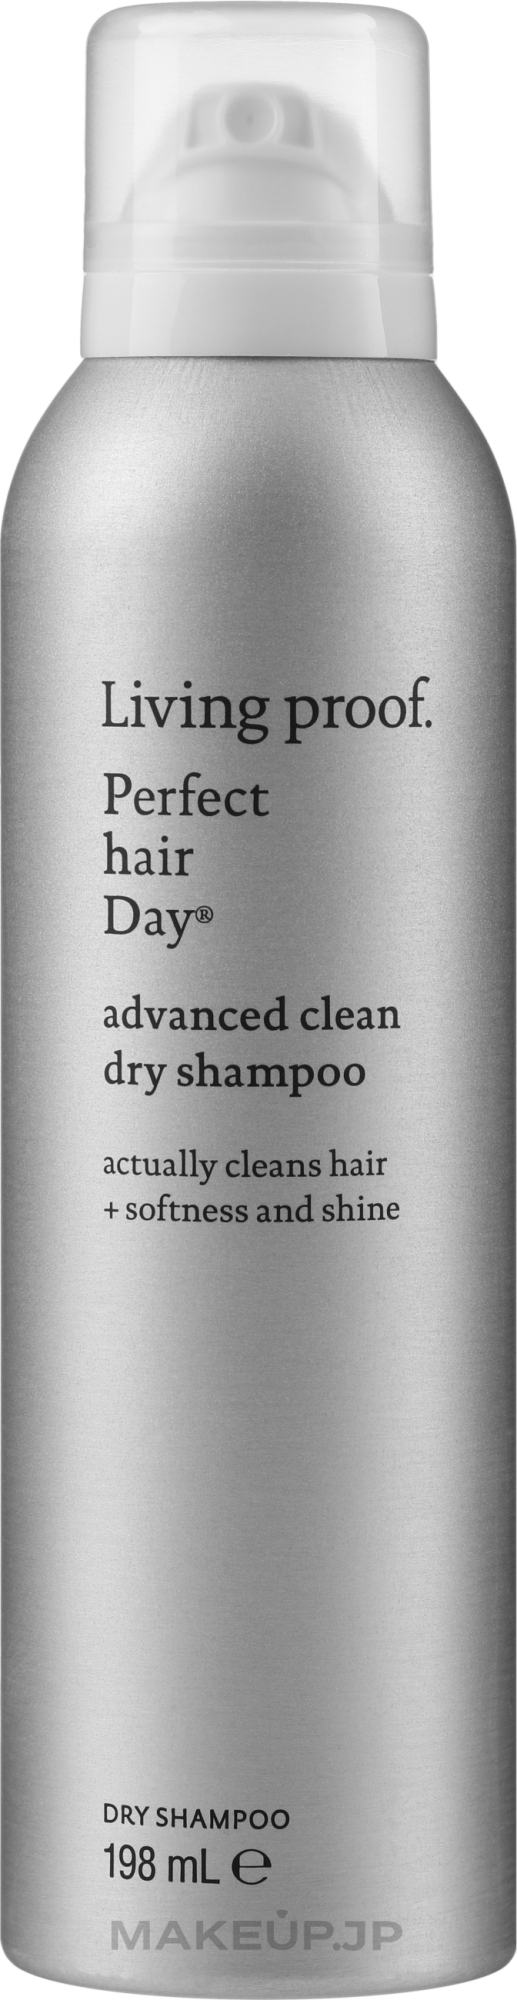 Dry Hair Shampoo - Living Proof Perfect Hair Day Advanced Clean Dry Shampoo — photo 198 ml